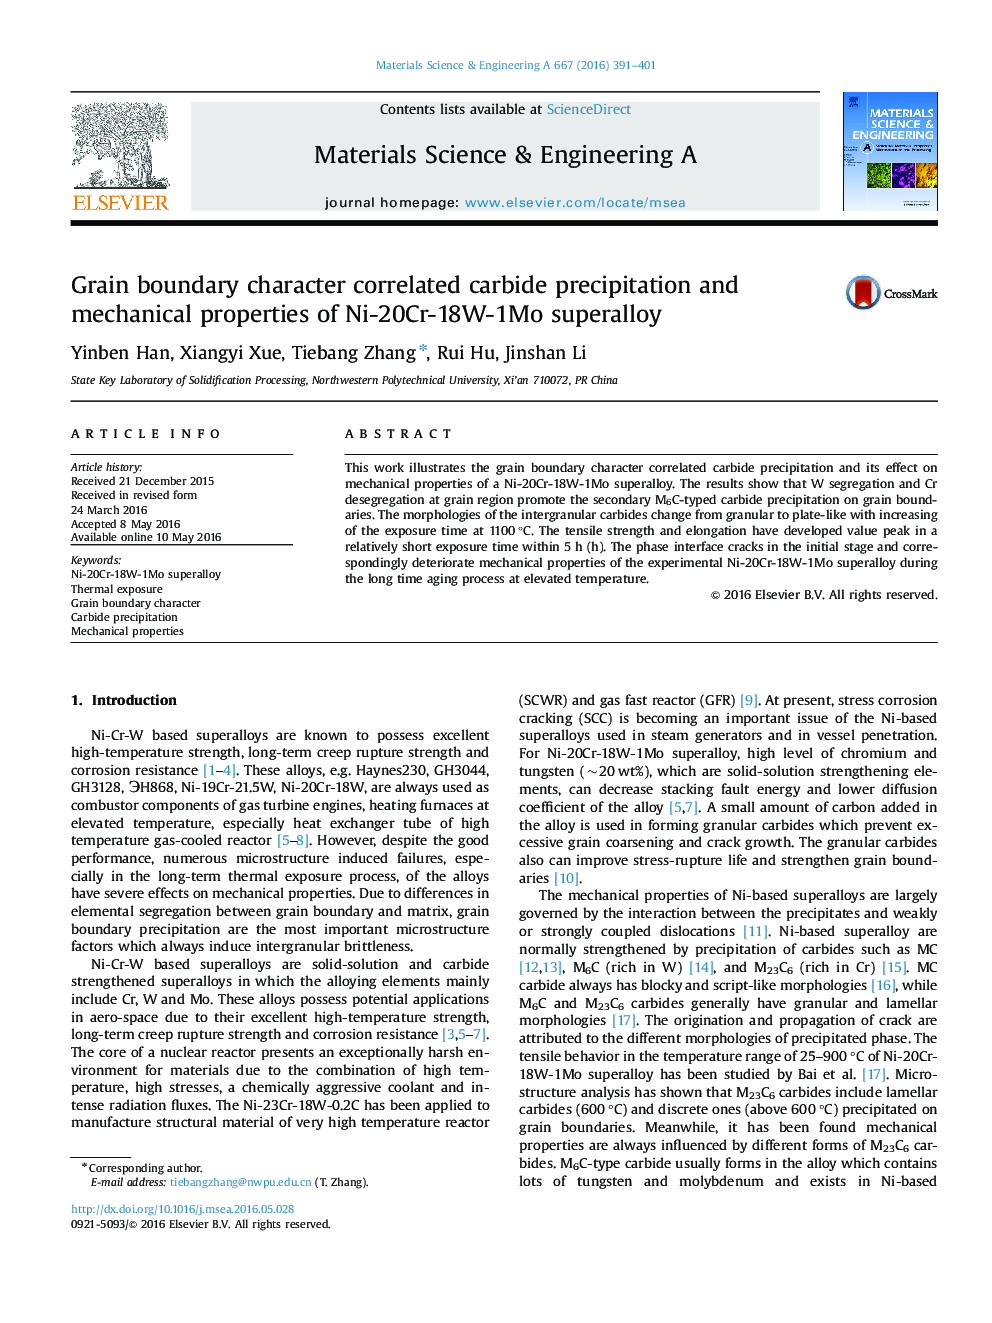 Grain boundary character correlated carbide precipitation and mechanical properties of Ni-20Cr-18W-1Mo superalloy